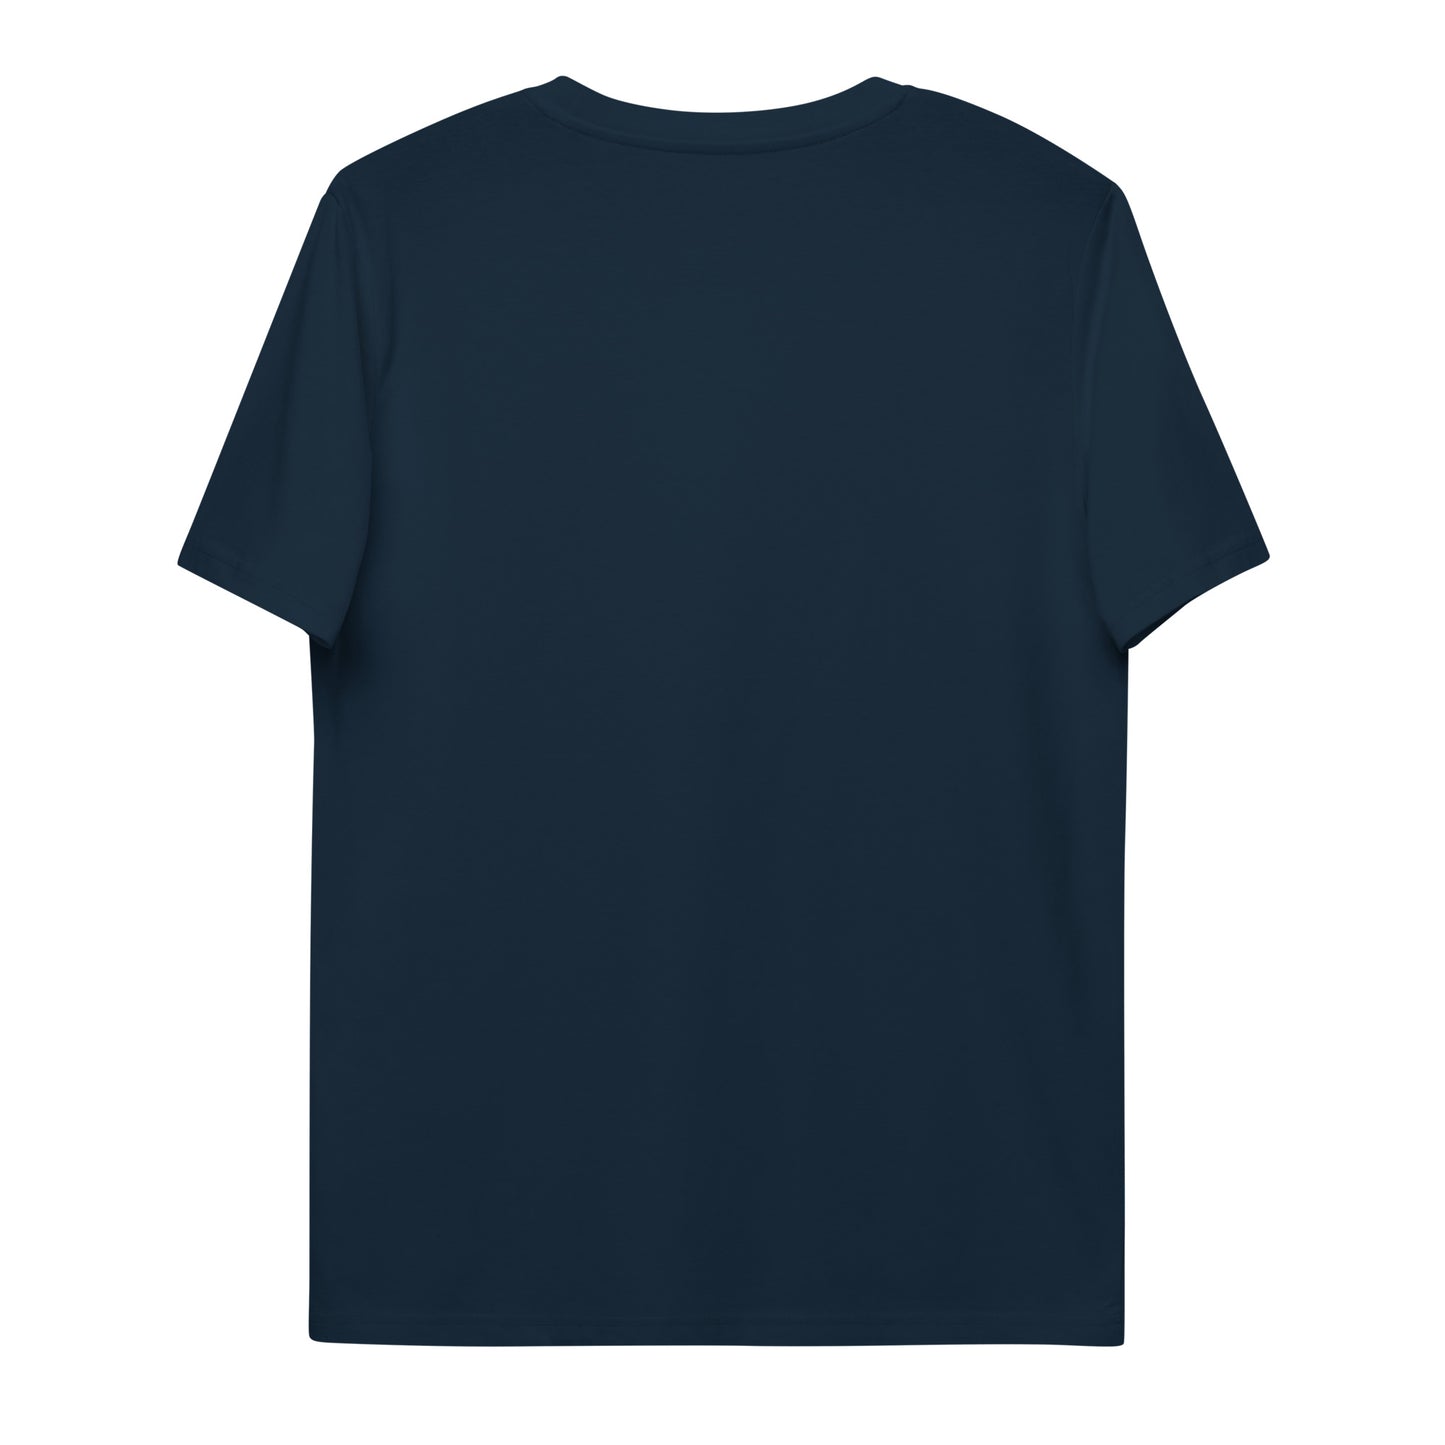 The Duke organic cotton t-shirt (unisex | embroidered)